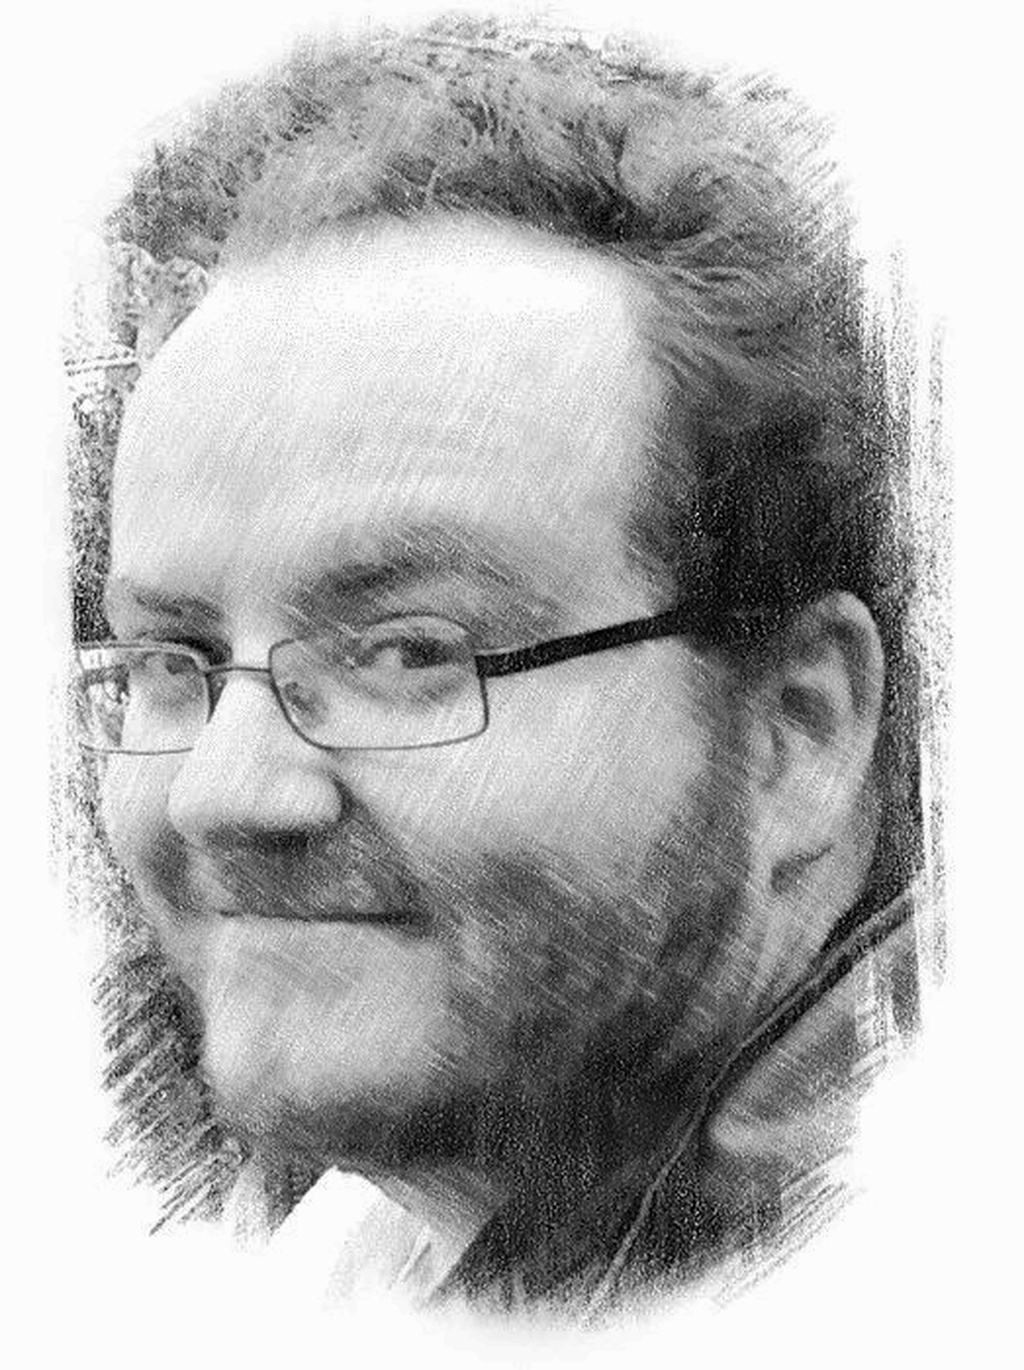 Robert Reid - Composed by John C Grant (https://johncgrant.com). Traditional composer from Kilmarnock, Ayrshire, Scotland.